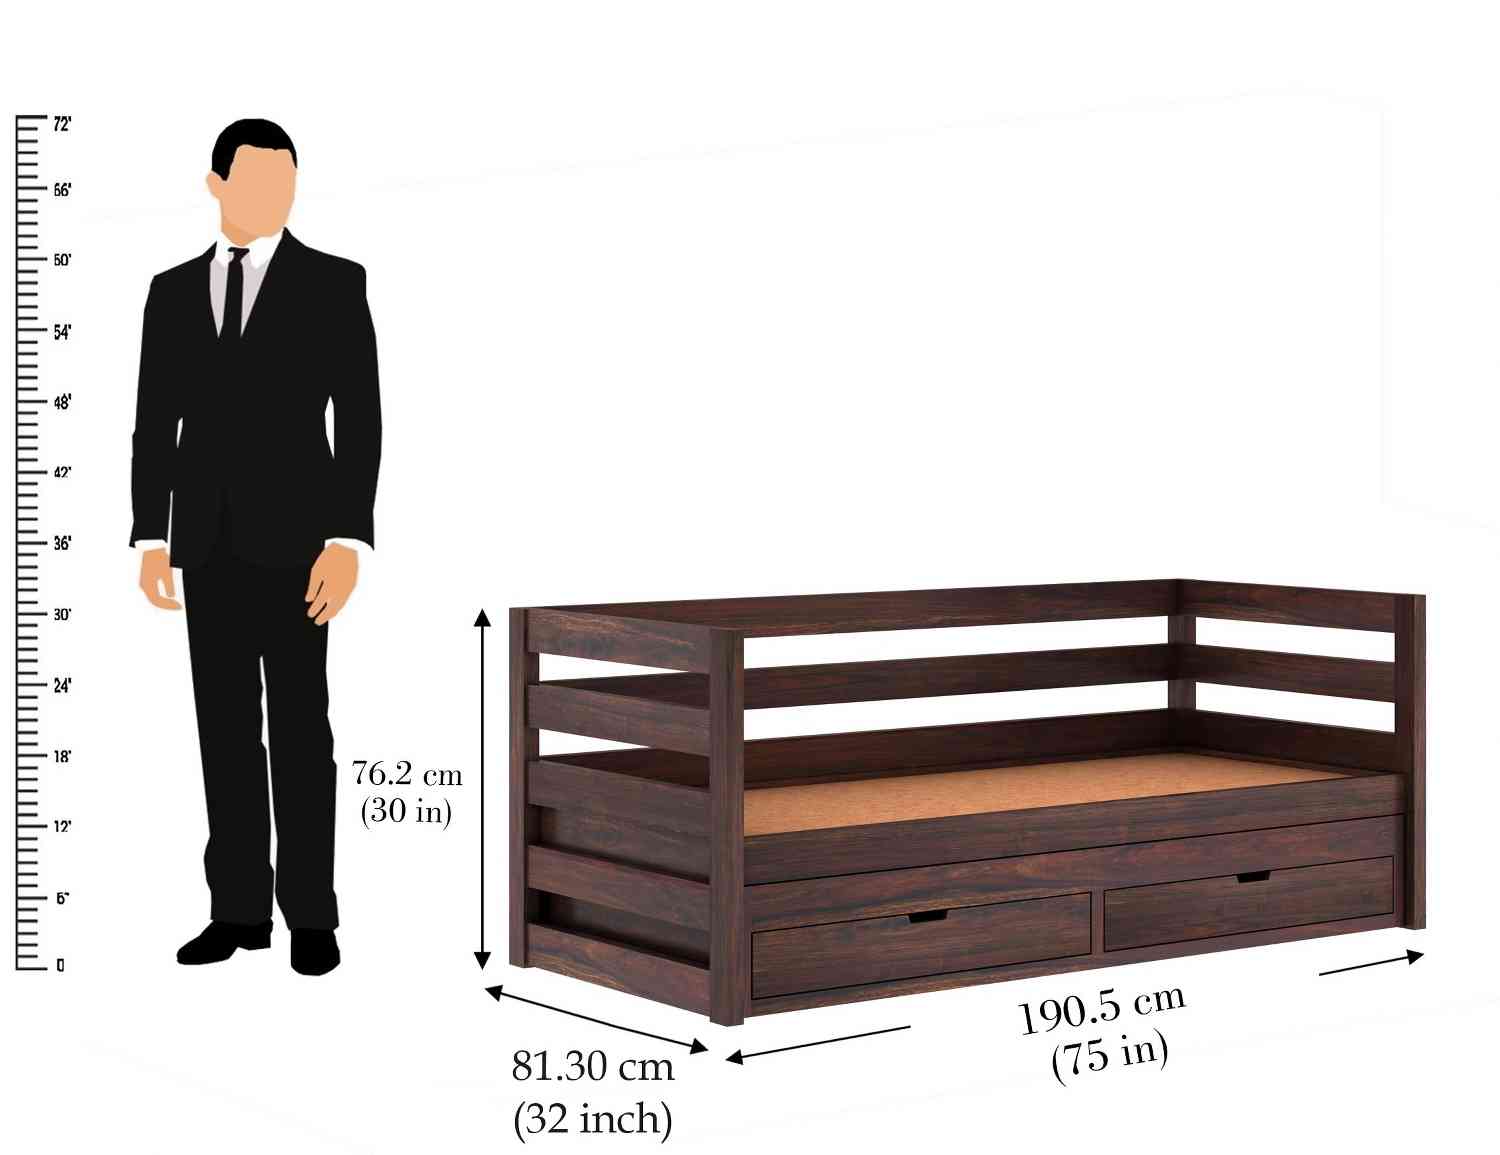 Feelinn Solid Sheesham Wood Trundle Bed For Kids (With Mattress, Walnut Finish)